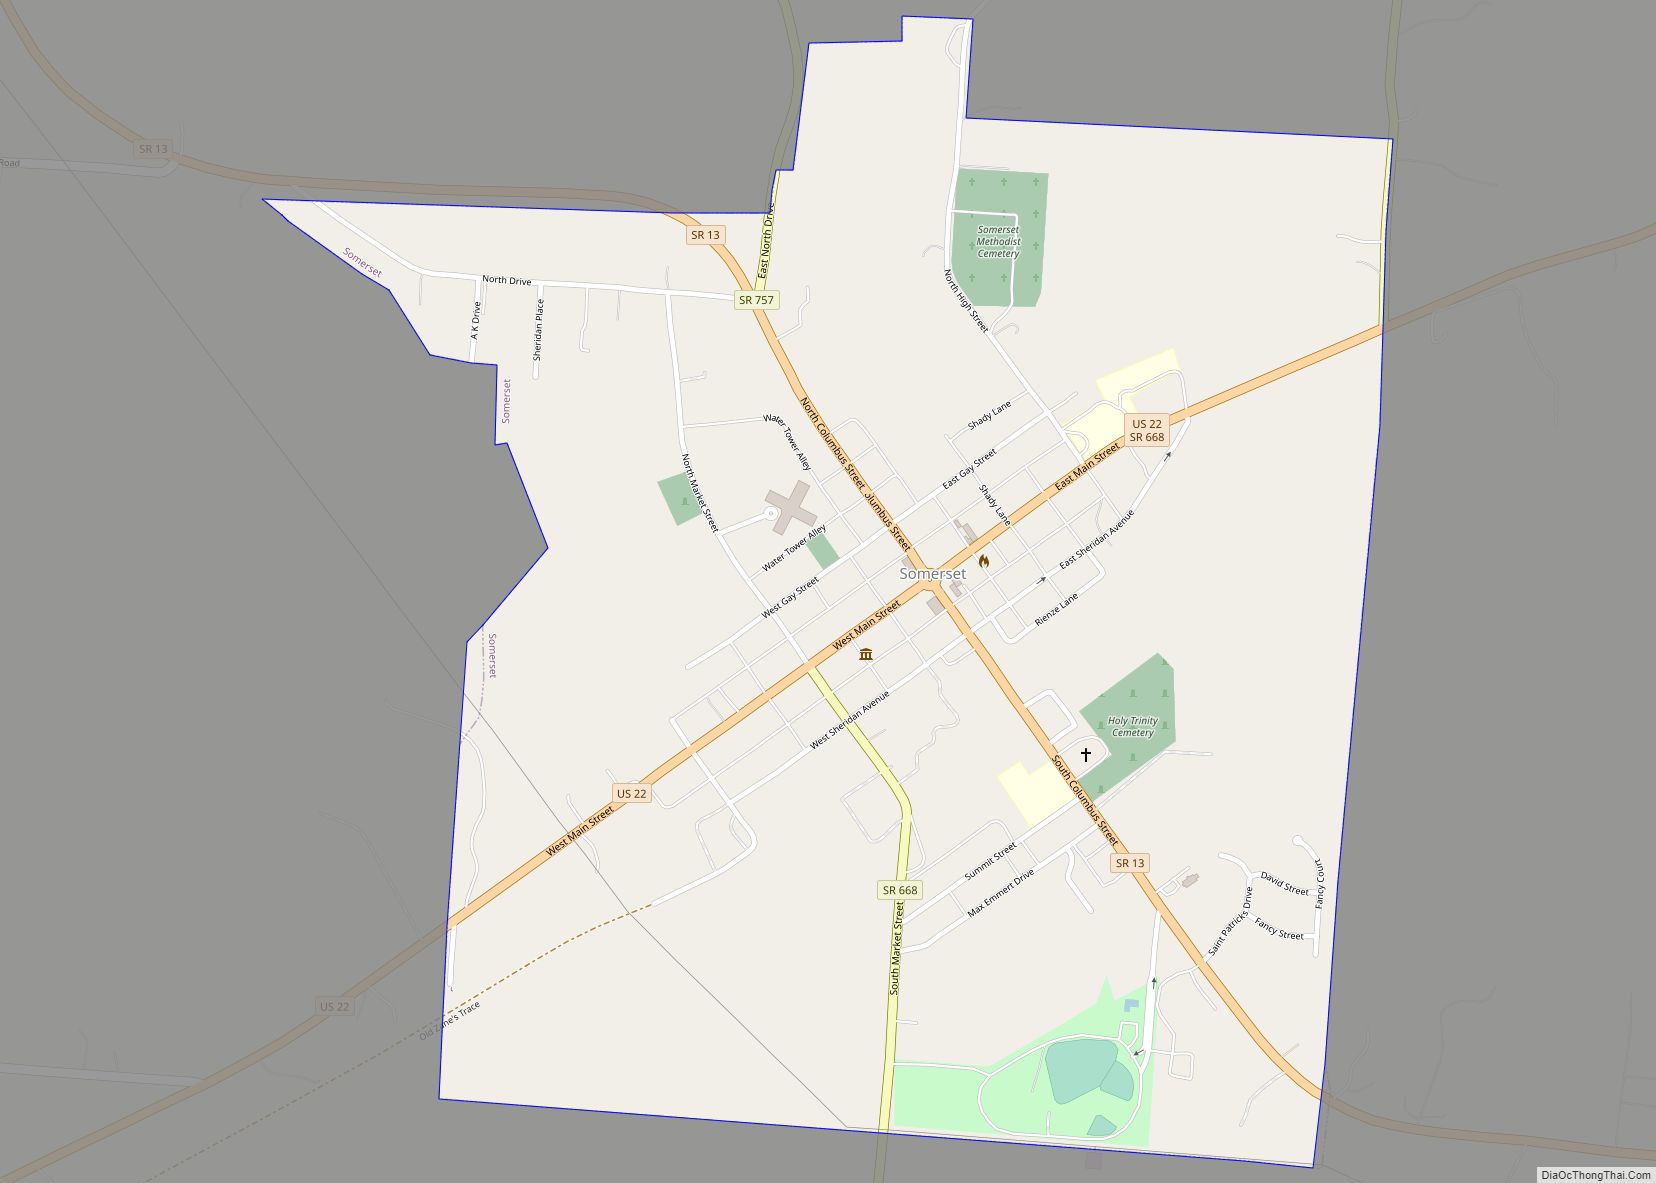 Map of Somerset village, Ohio